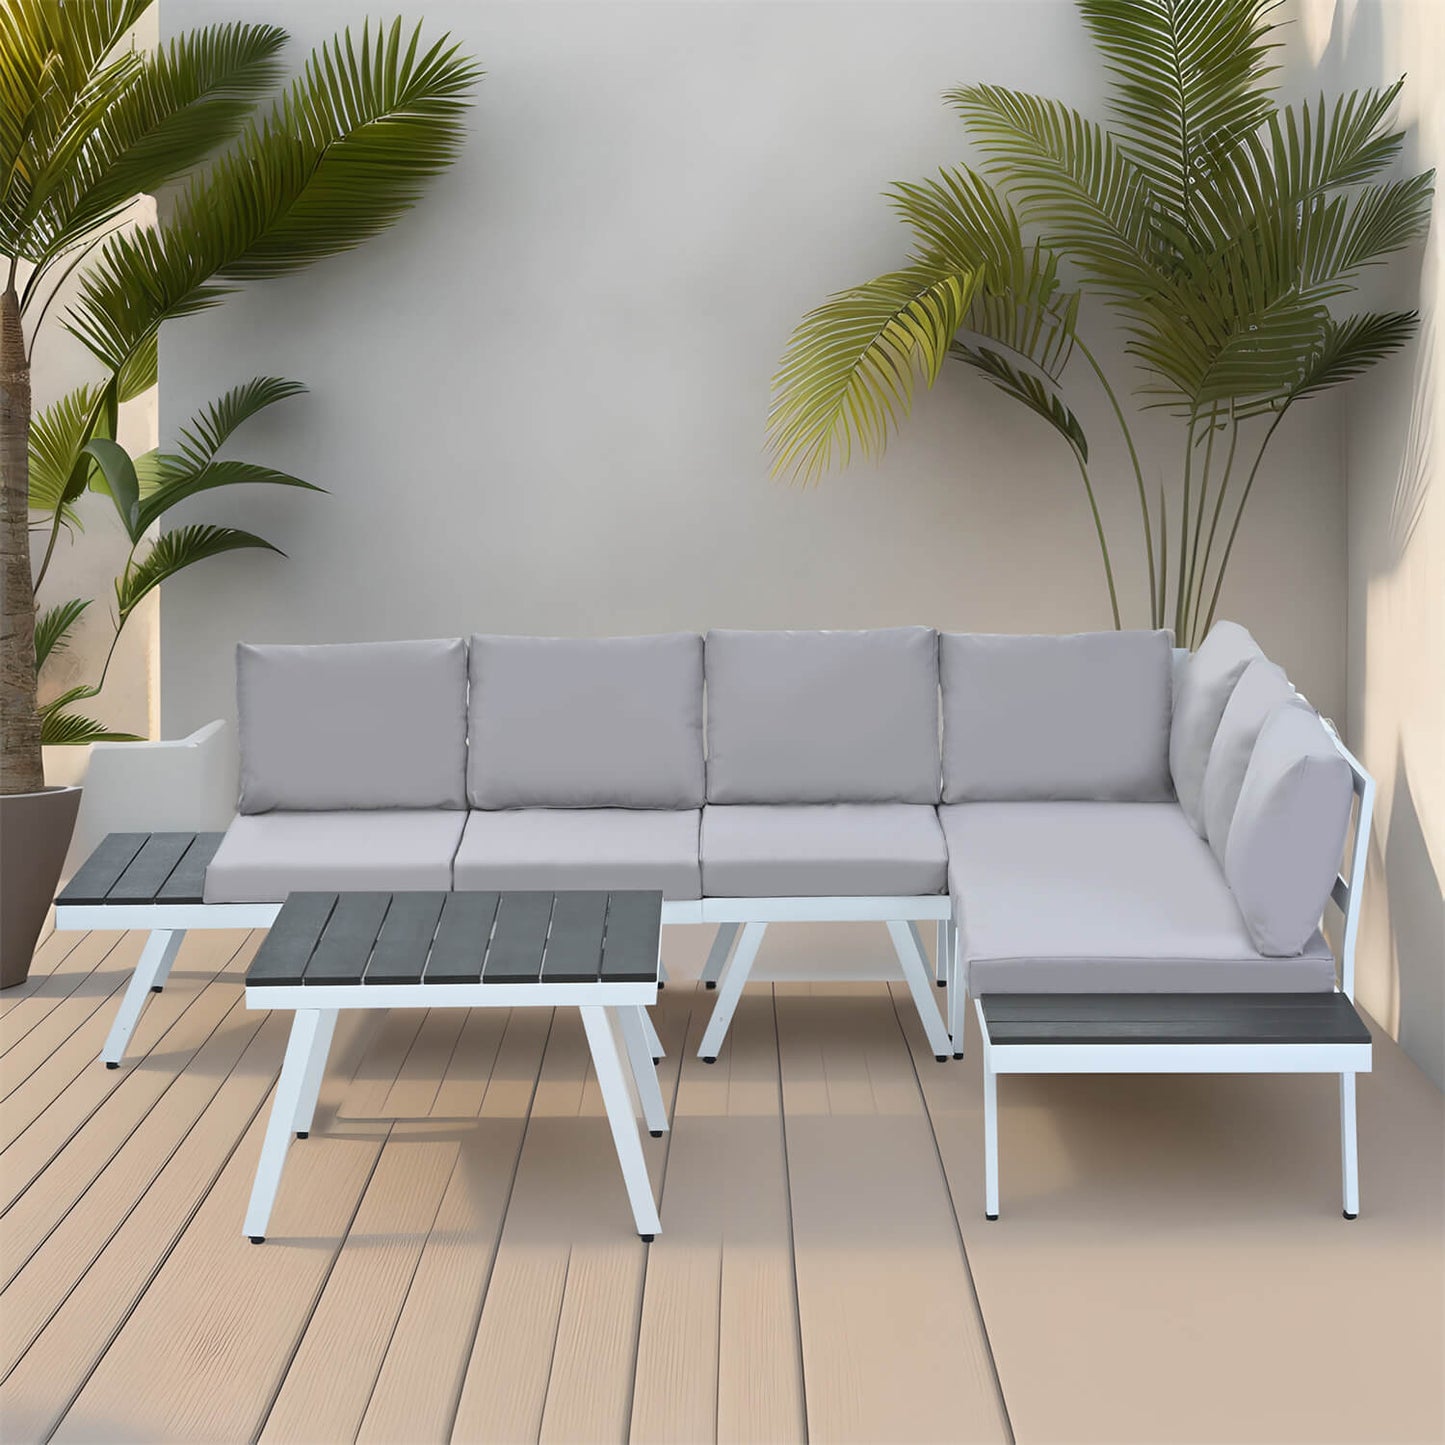 Industrial 5-Piece Aluminum Outdoor Patio Furniture Set